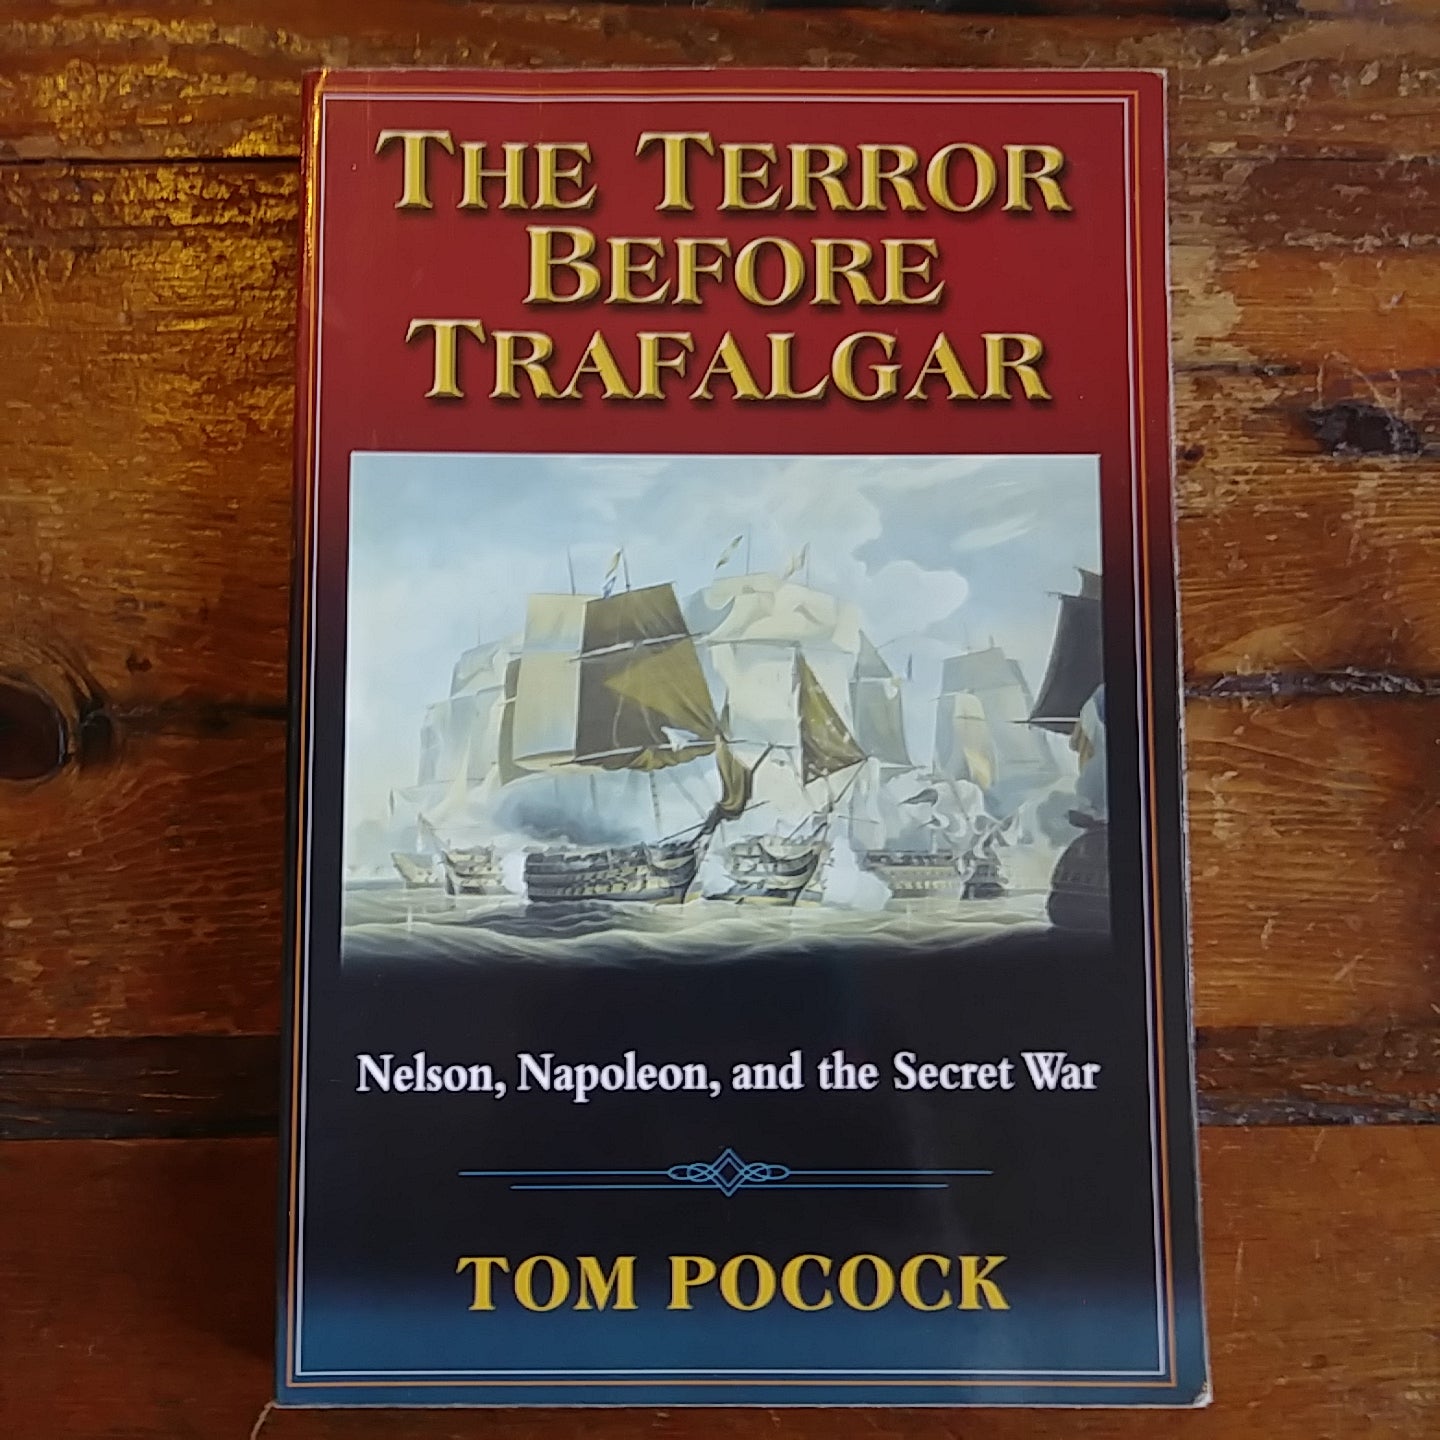 Book, "The Terror Before Trafalgar - Nelson, Napoleon, and the Secret War"